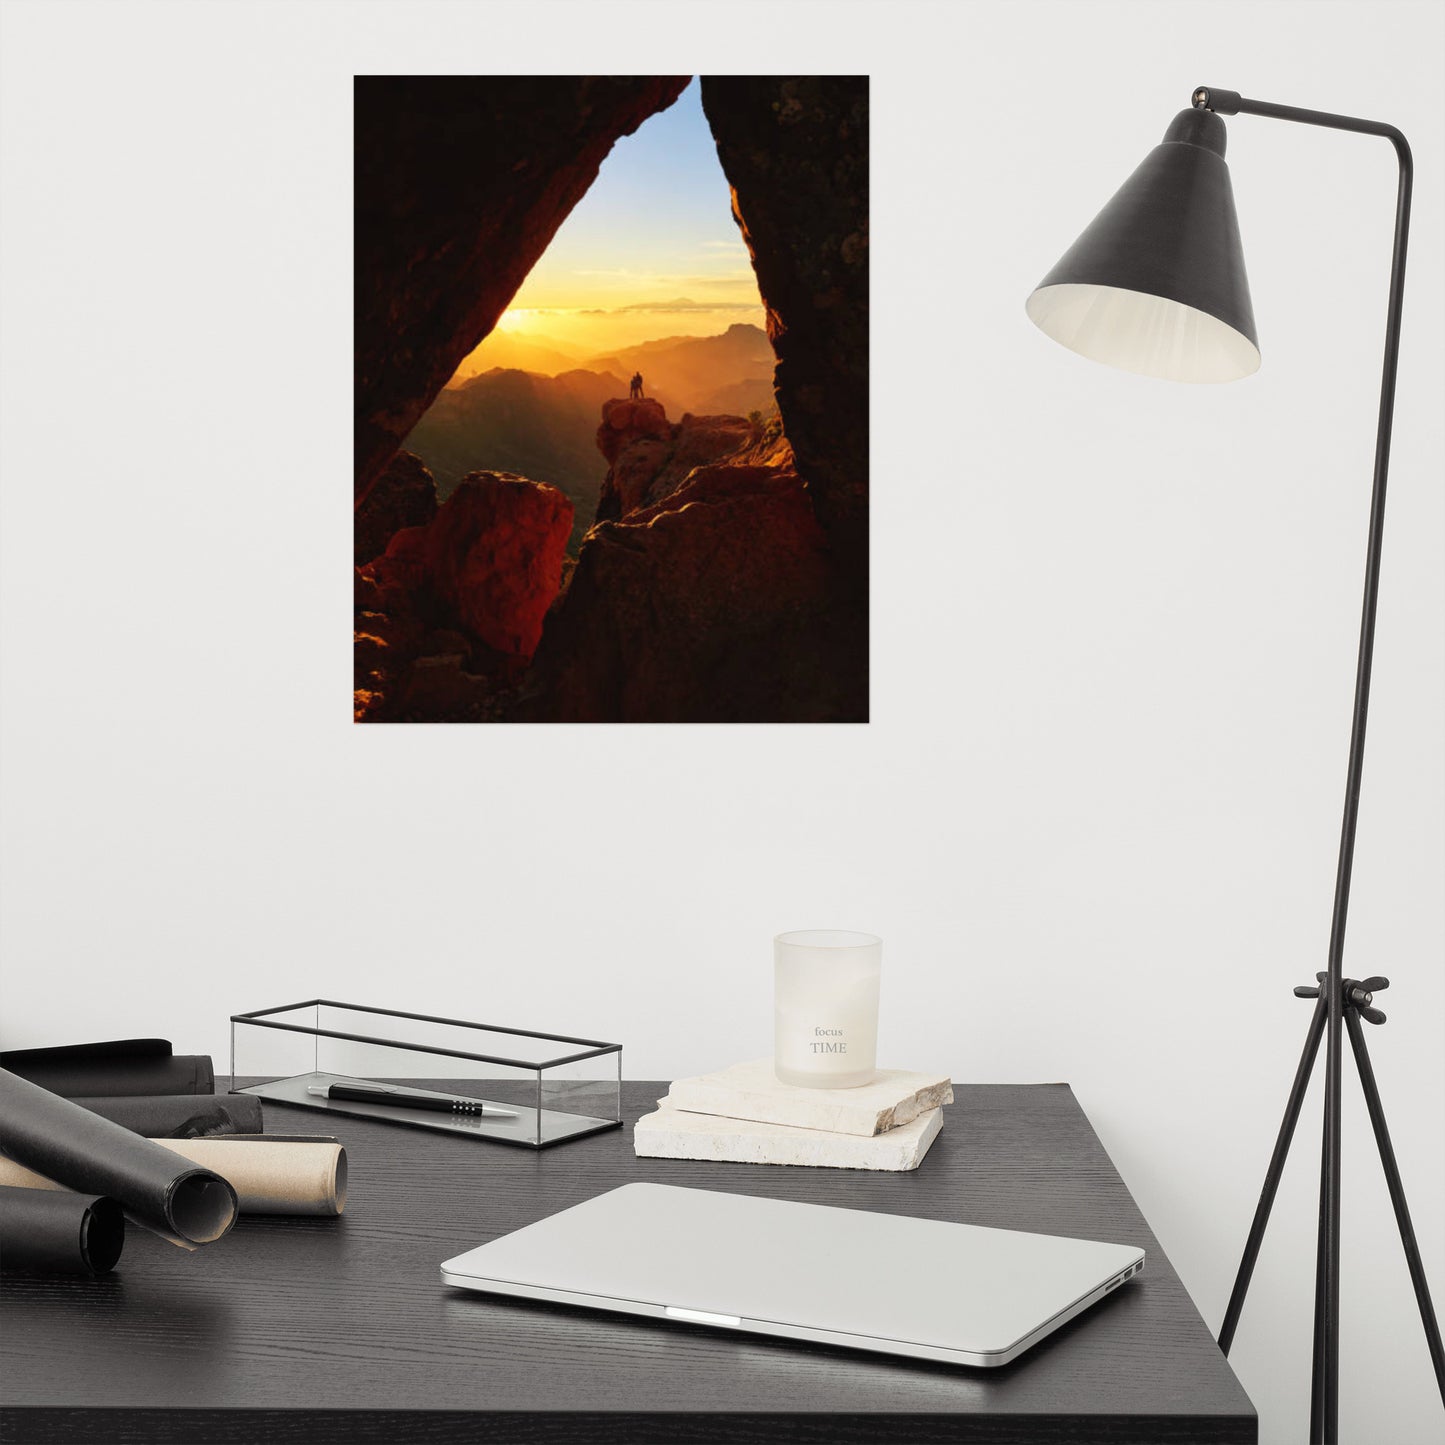 Sunset Mountain Arch Landscape Photograph Loose Wall Art Print